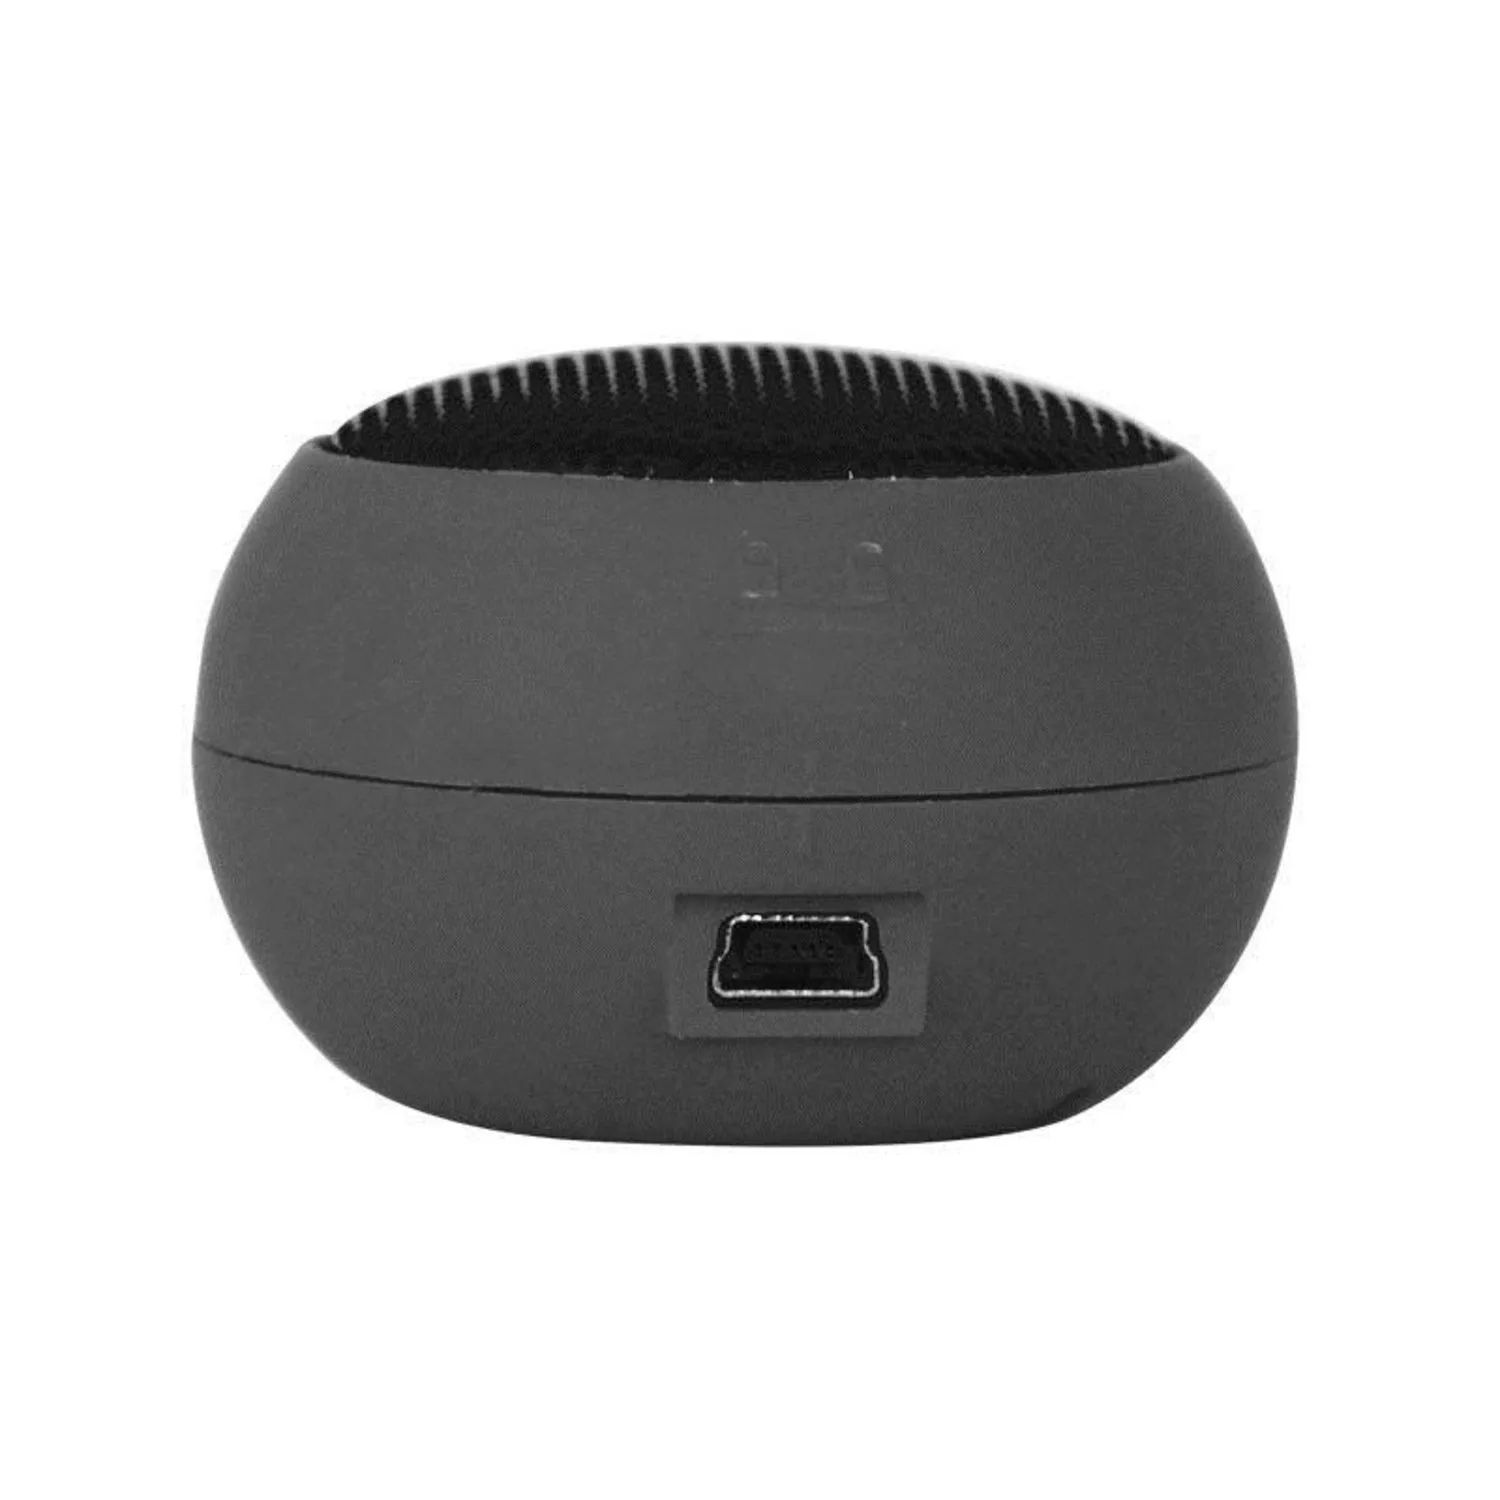 Photo of Mini Portable Hamburger Speaker Amplifier for iPod/iPad/Laptop/Phone/Tblet PC